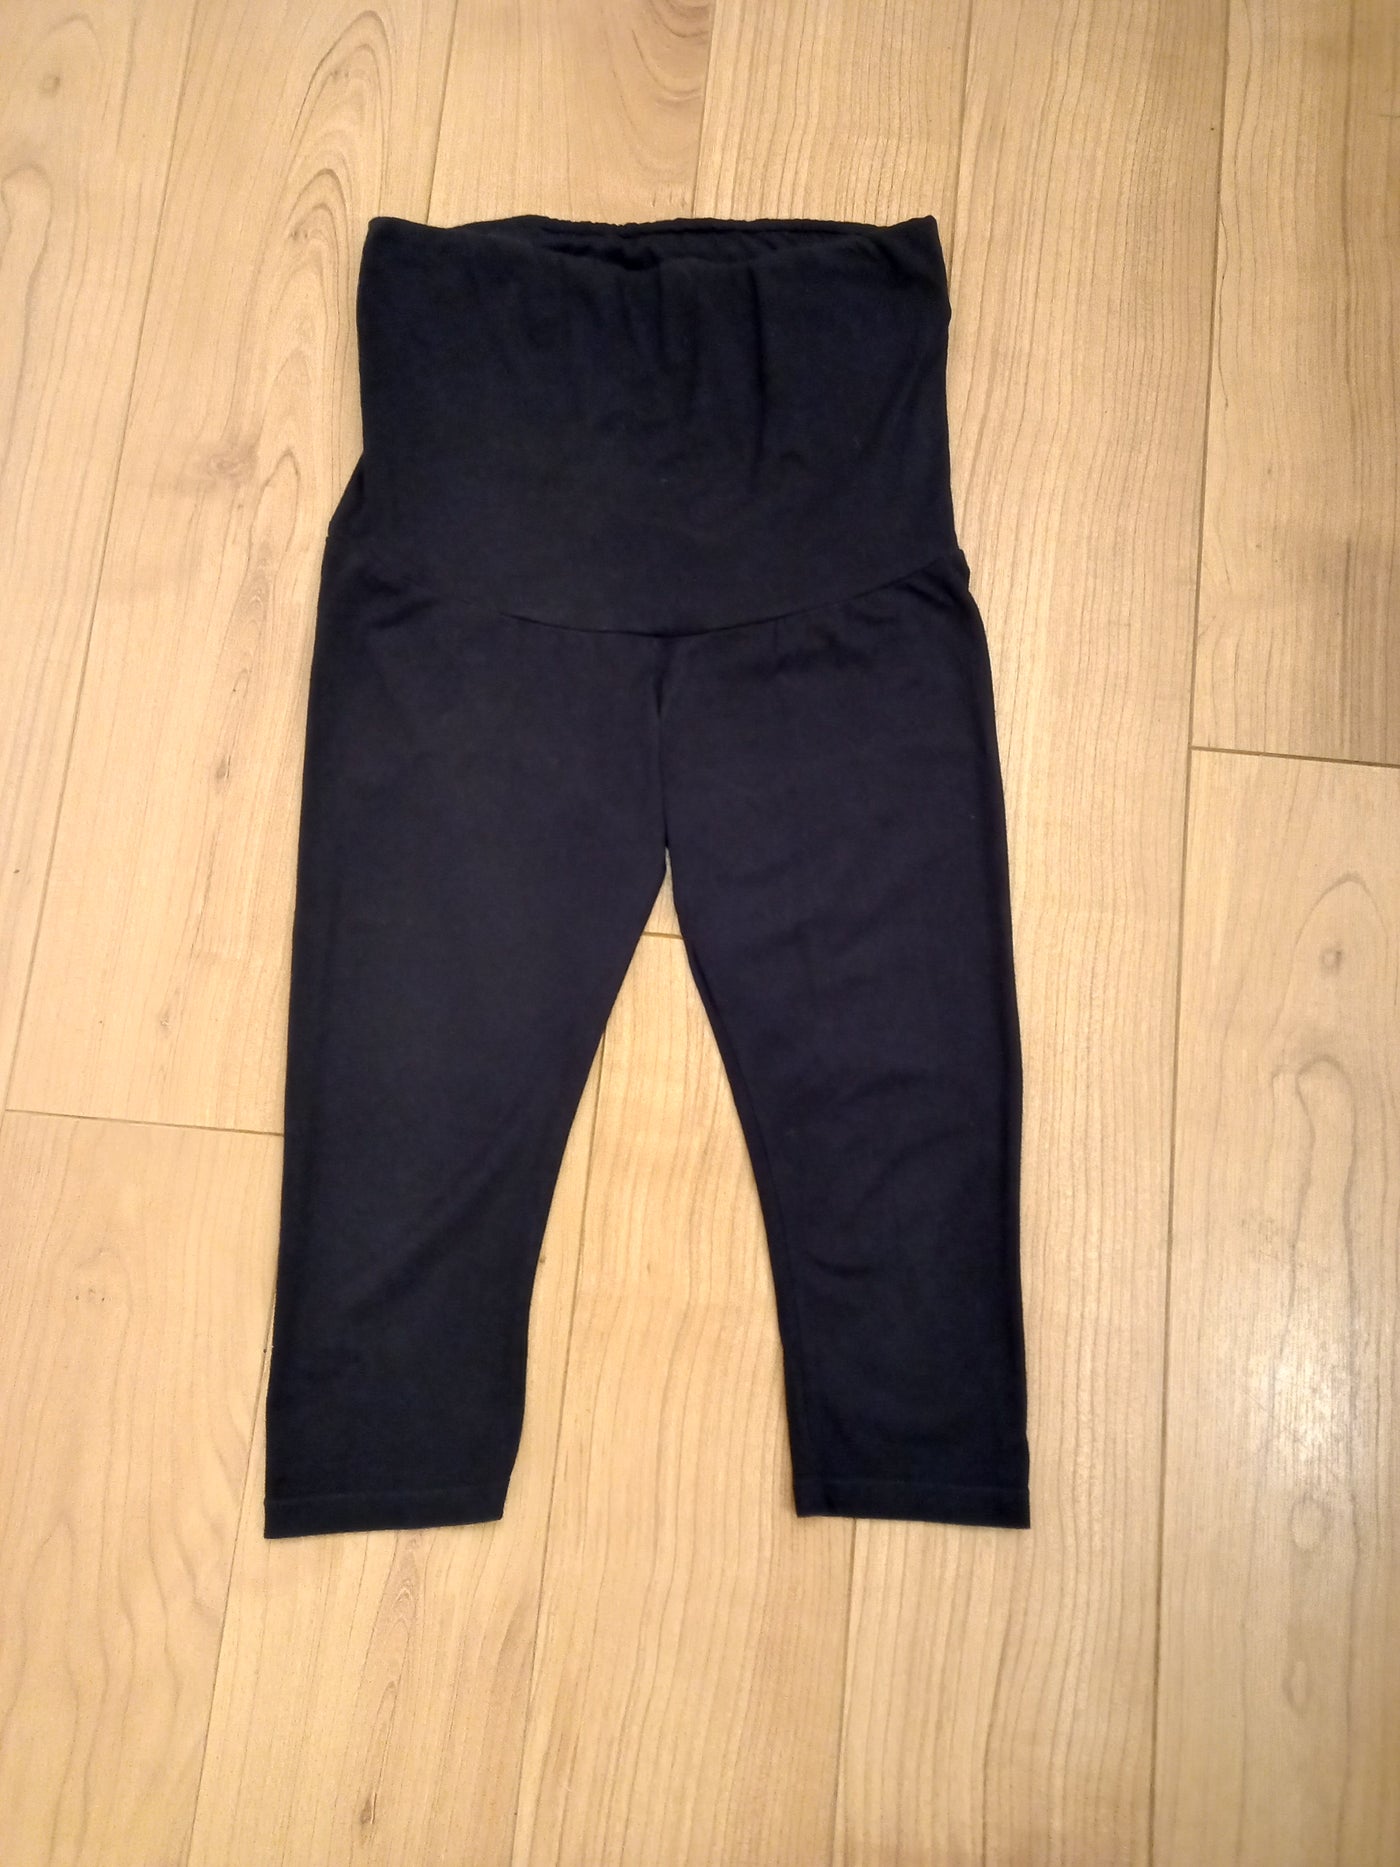 Jojo Maman Bebe black overbump cropped leggings - Size S (Approx UK 8/10)